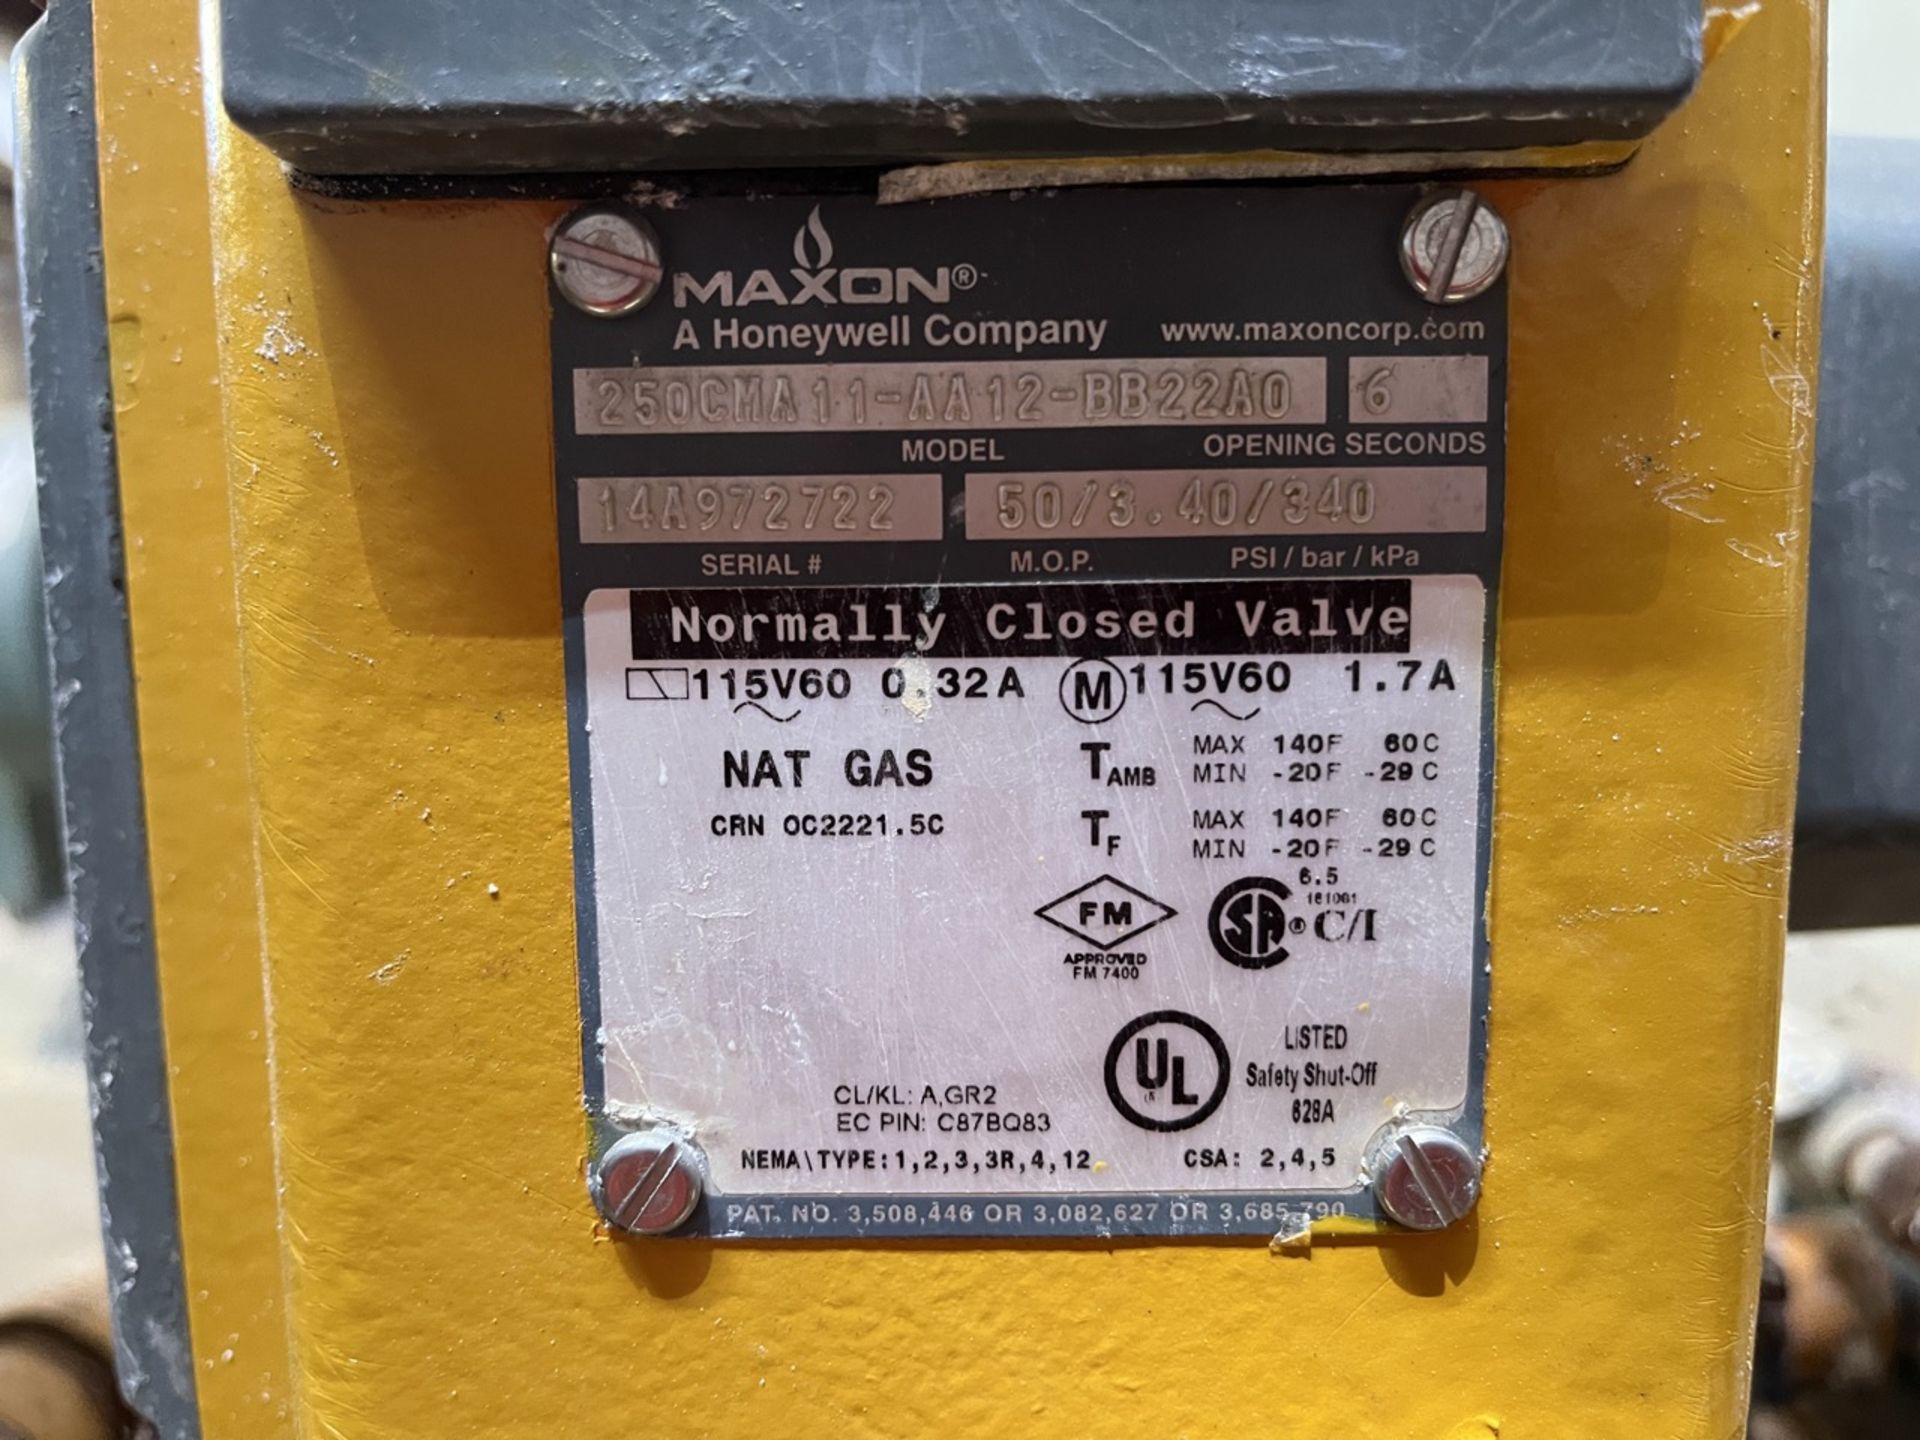 Natural gas dispensing station, with Maxon control board, 2 maxon valves model 250CMA11-AA12.BB22A0 - Bild 22 aus 31